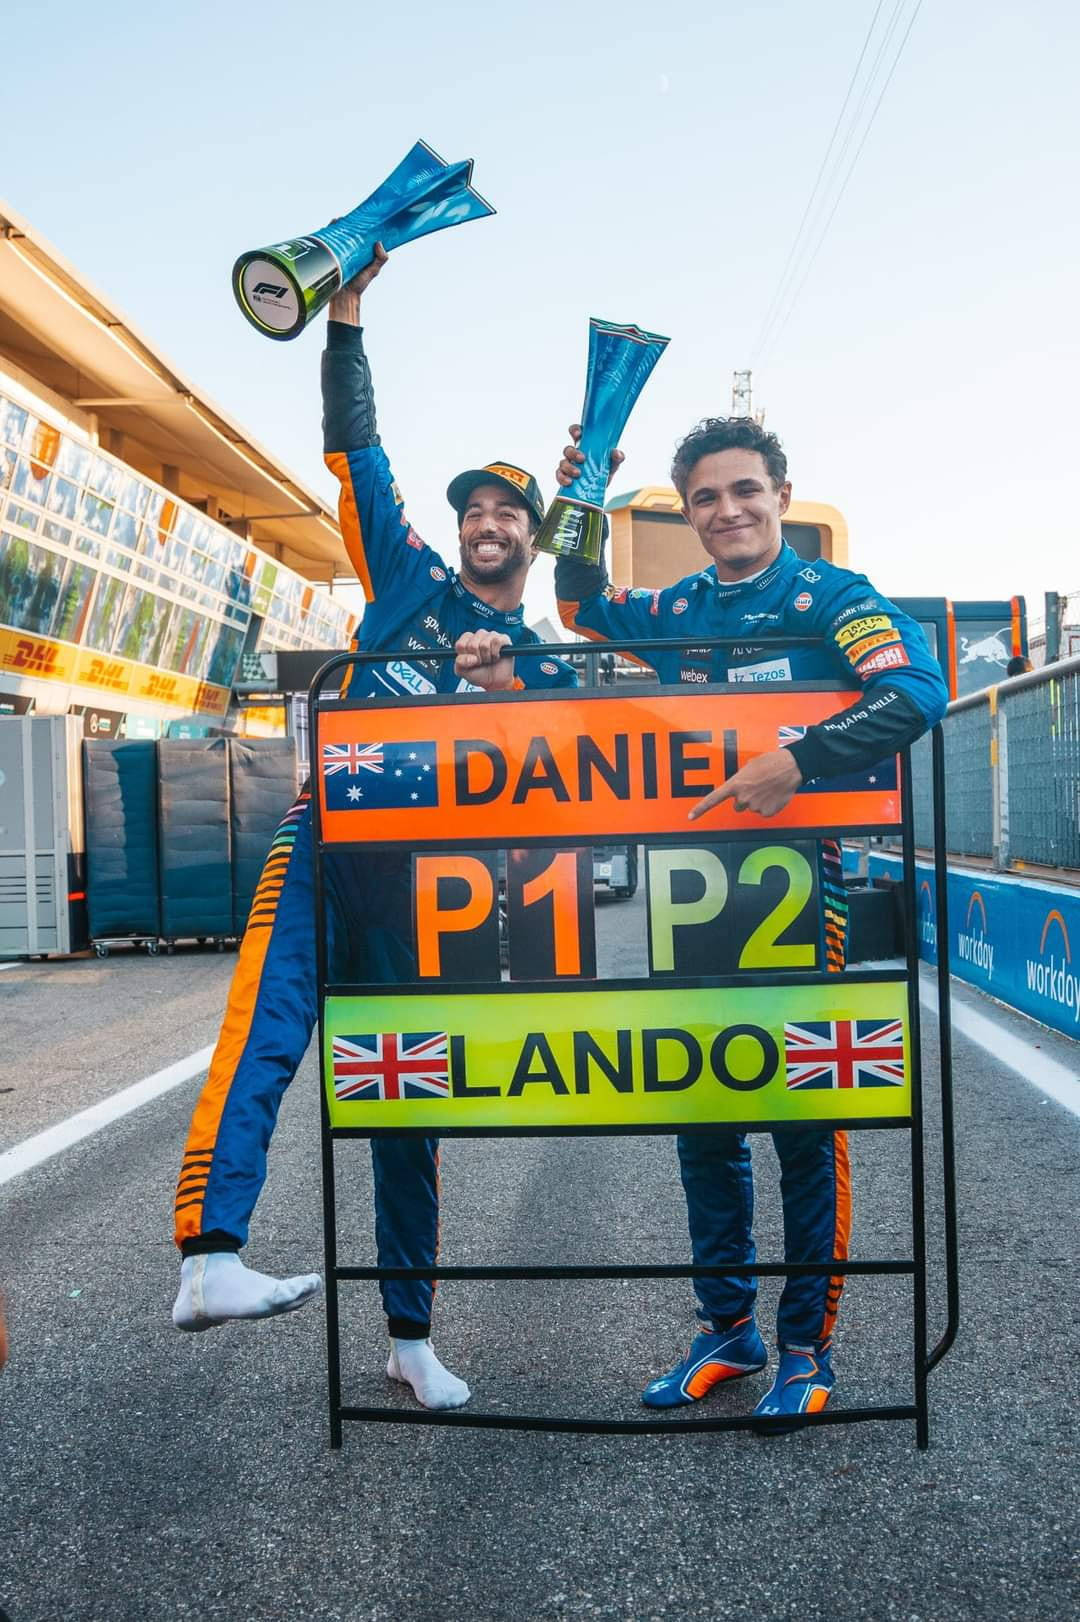 Daniel Ricciardo and Lando Norris celebrating with their trophies Wallpaper